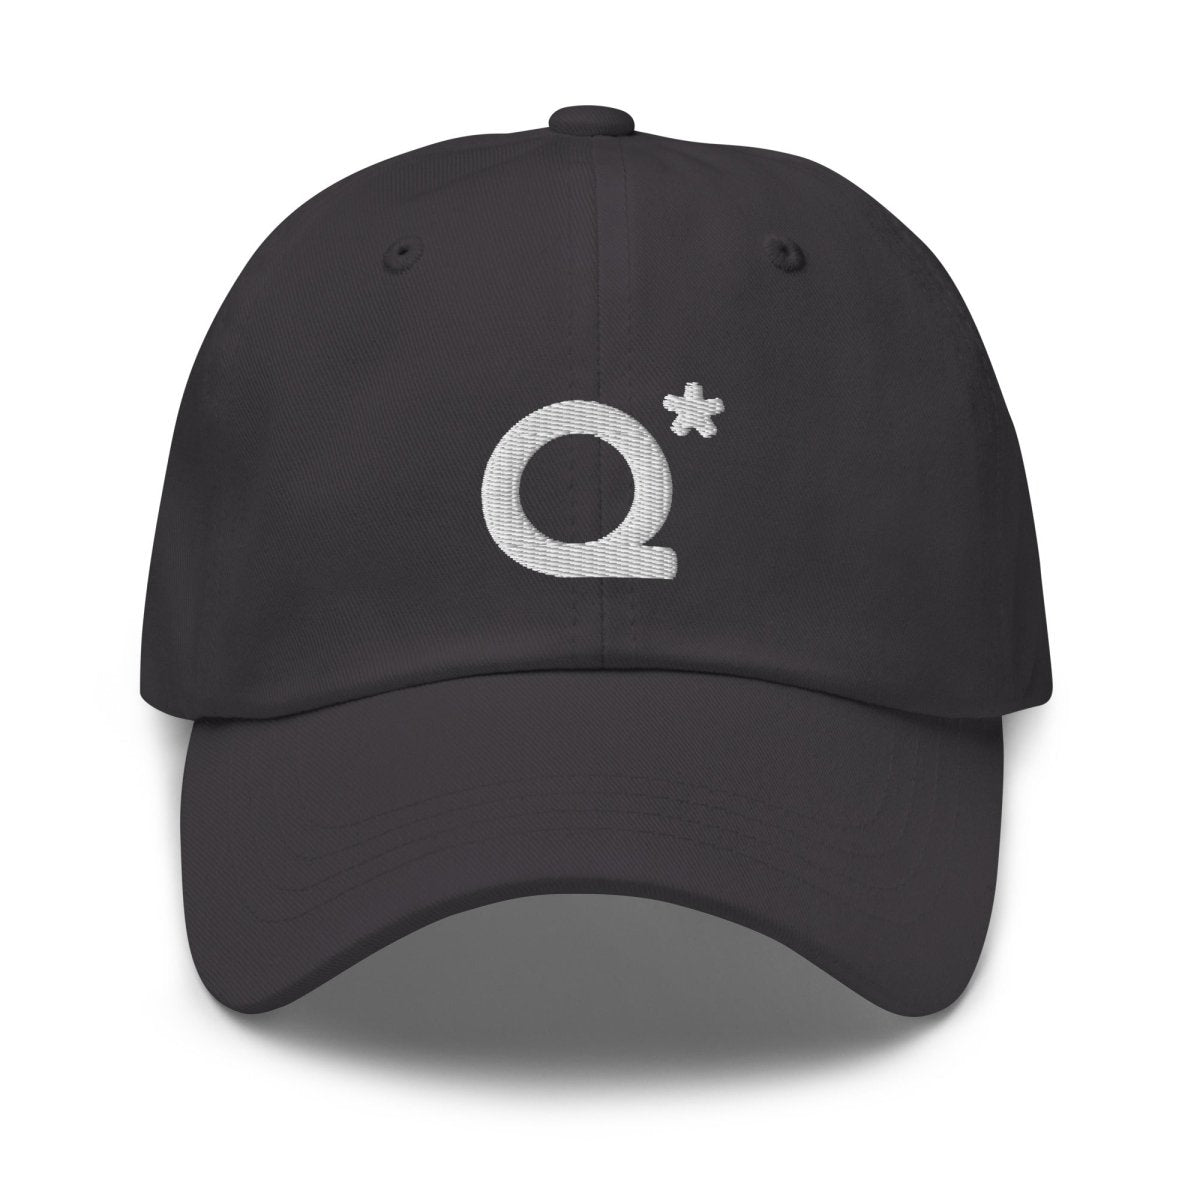 Q* (Q - Star) Embroidered Cap 1 - Dark Grey - AI Store